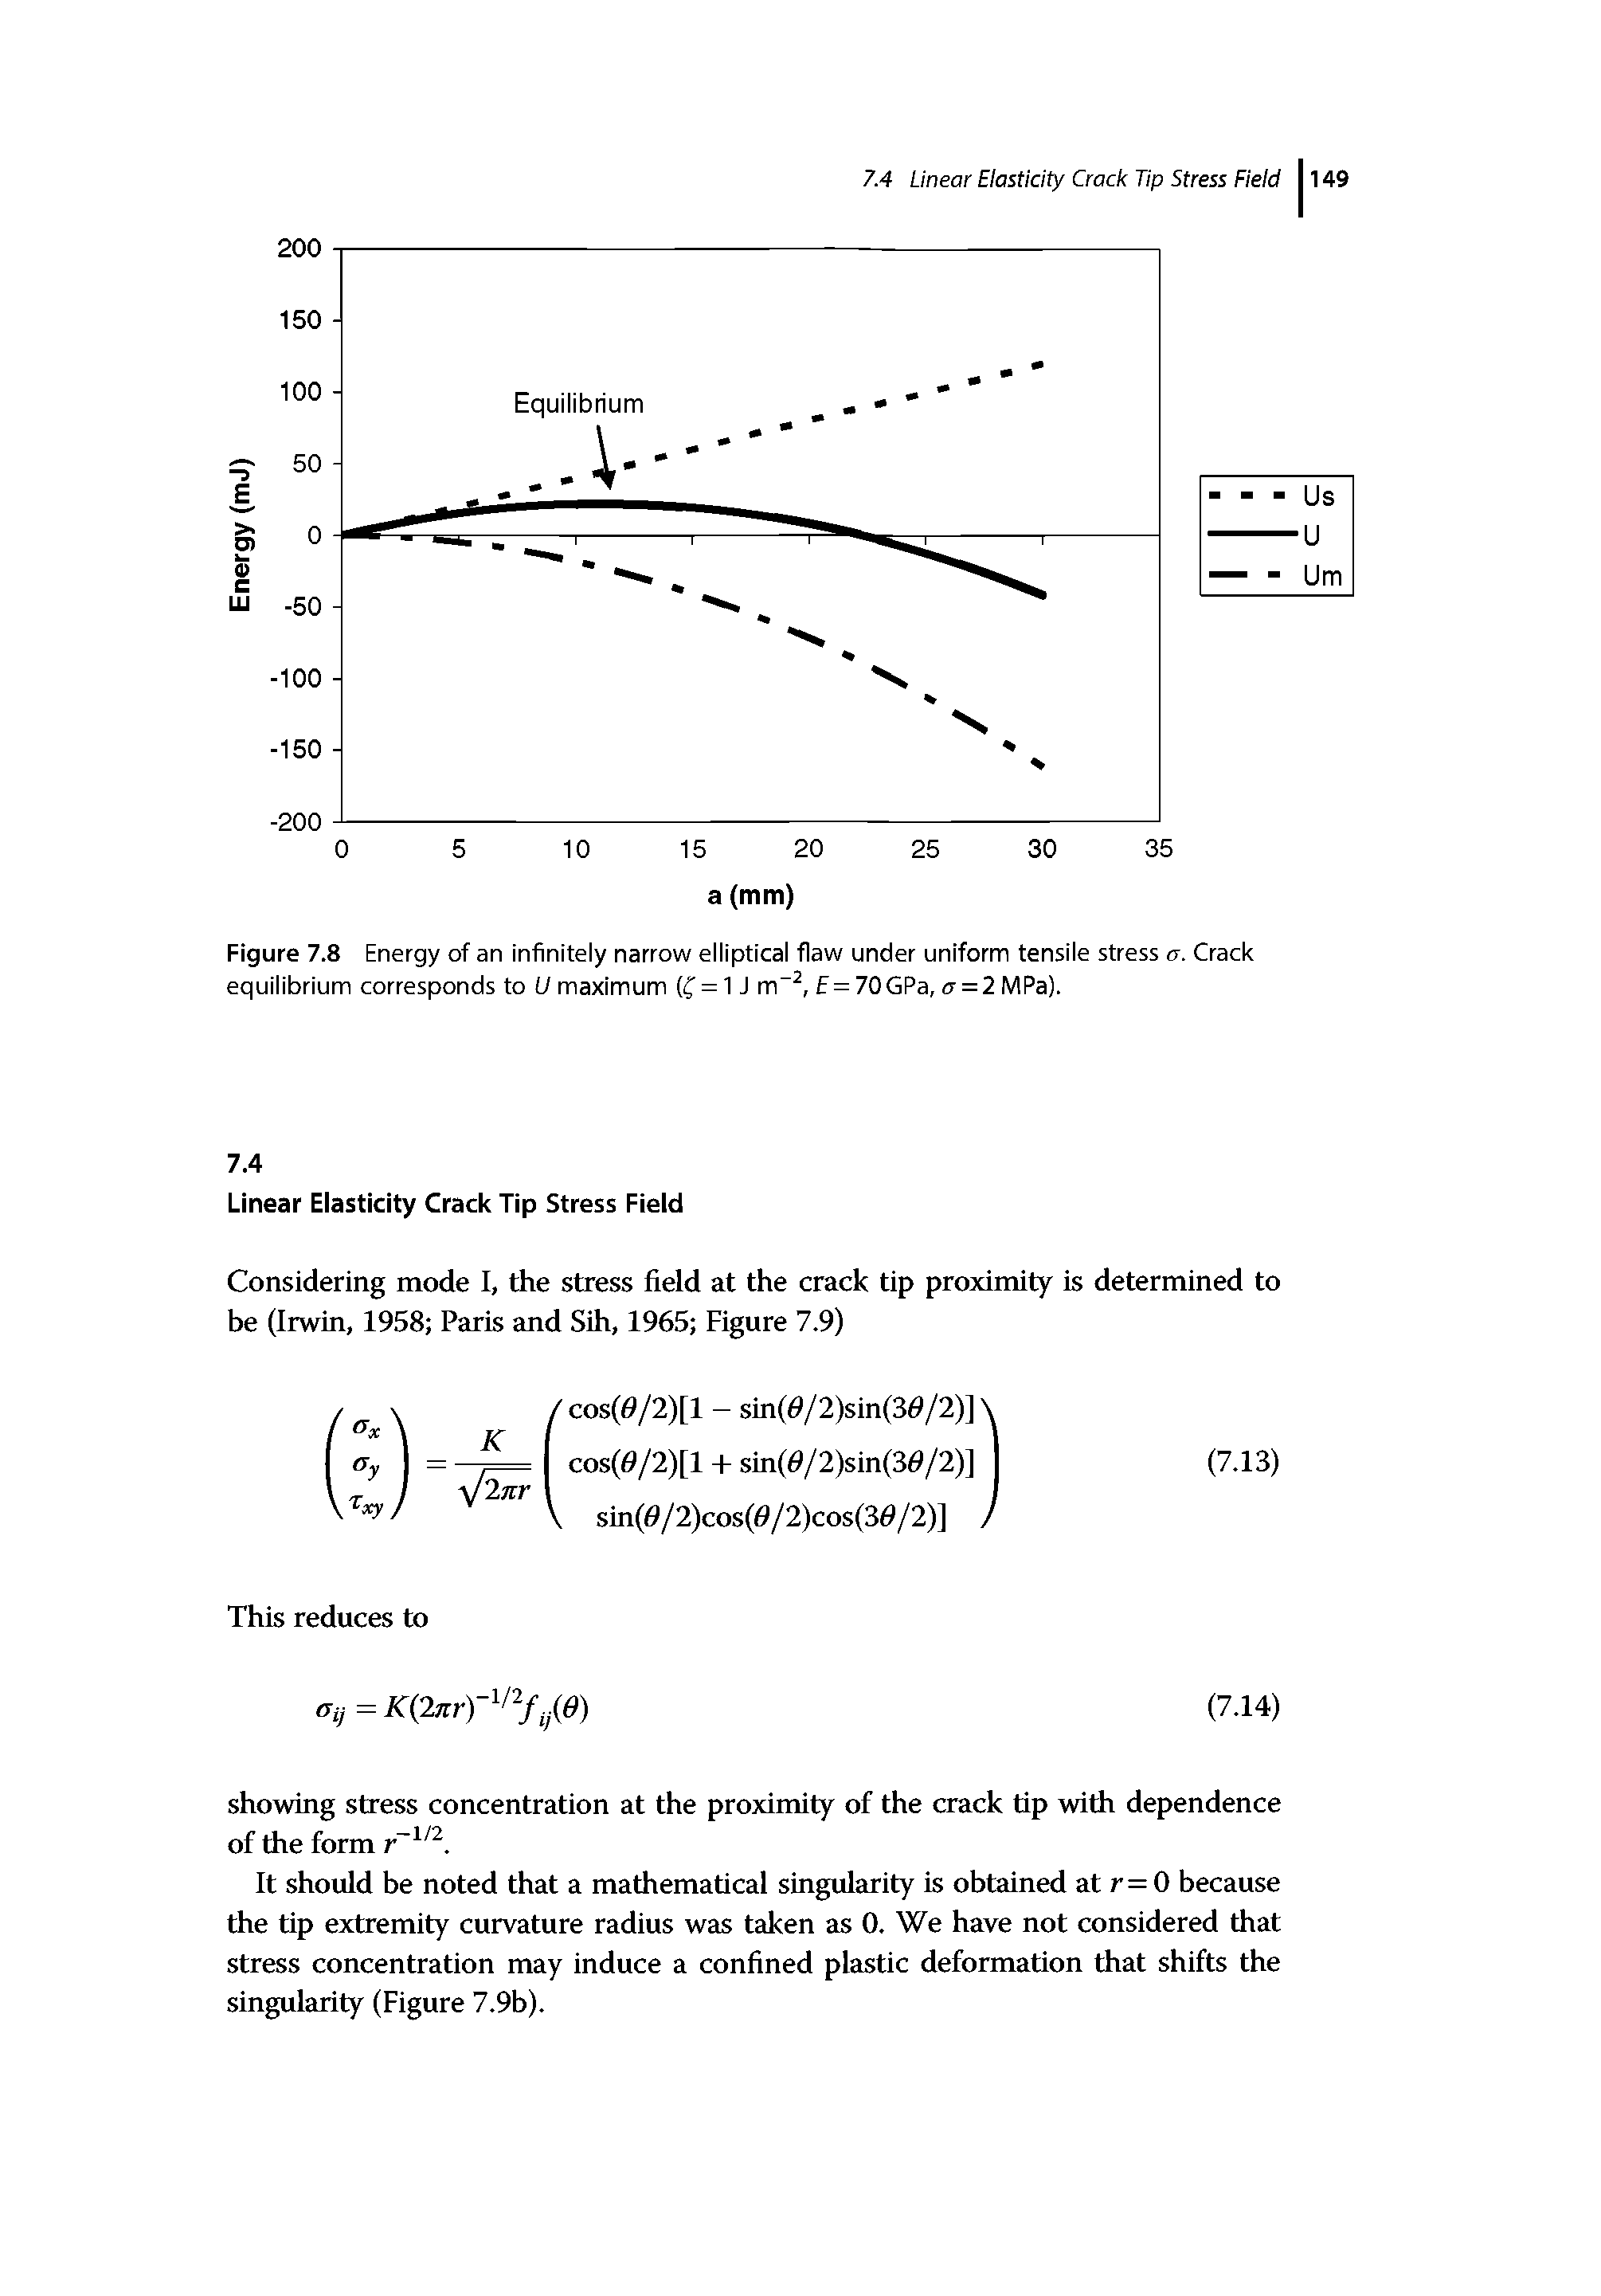 Figure 7.8 Energy of an infinitely narrow elliptical flaw under uniform tensile stress a. Crack equilibrium corresponds to U maximum (f = 1J m", E = 70GPa, o- = 2 MPa).